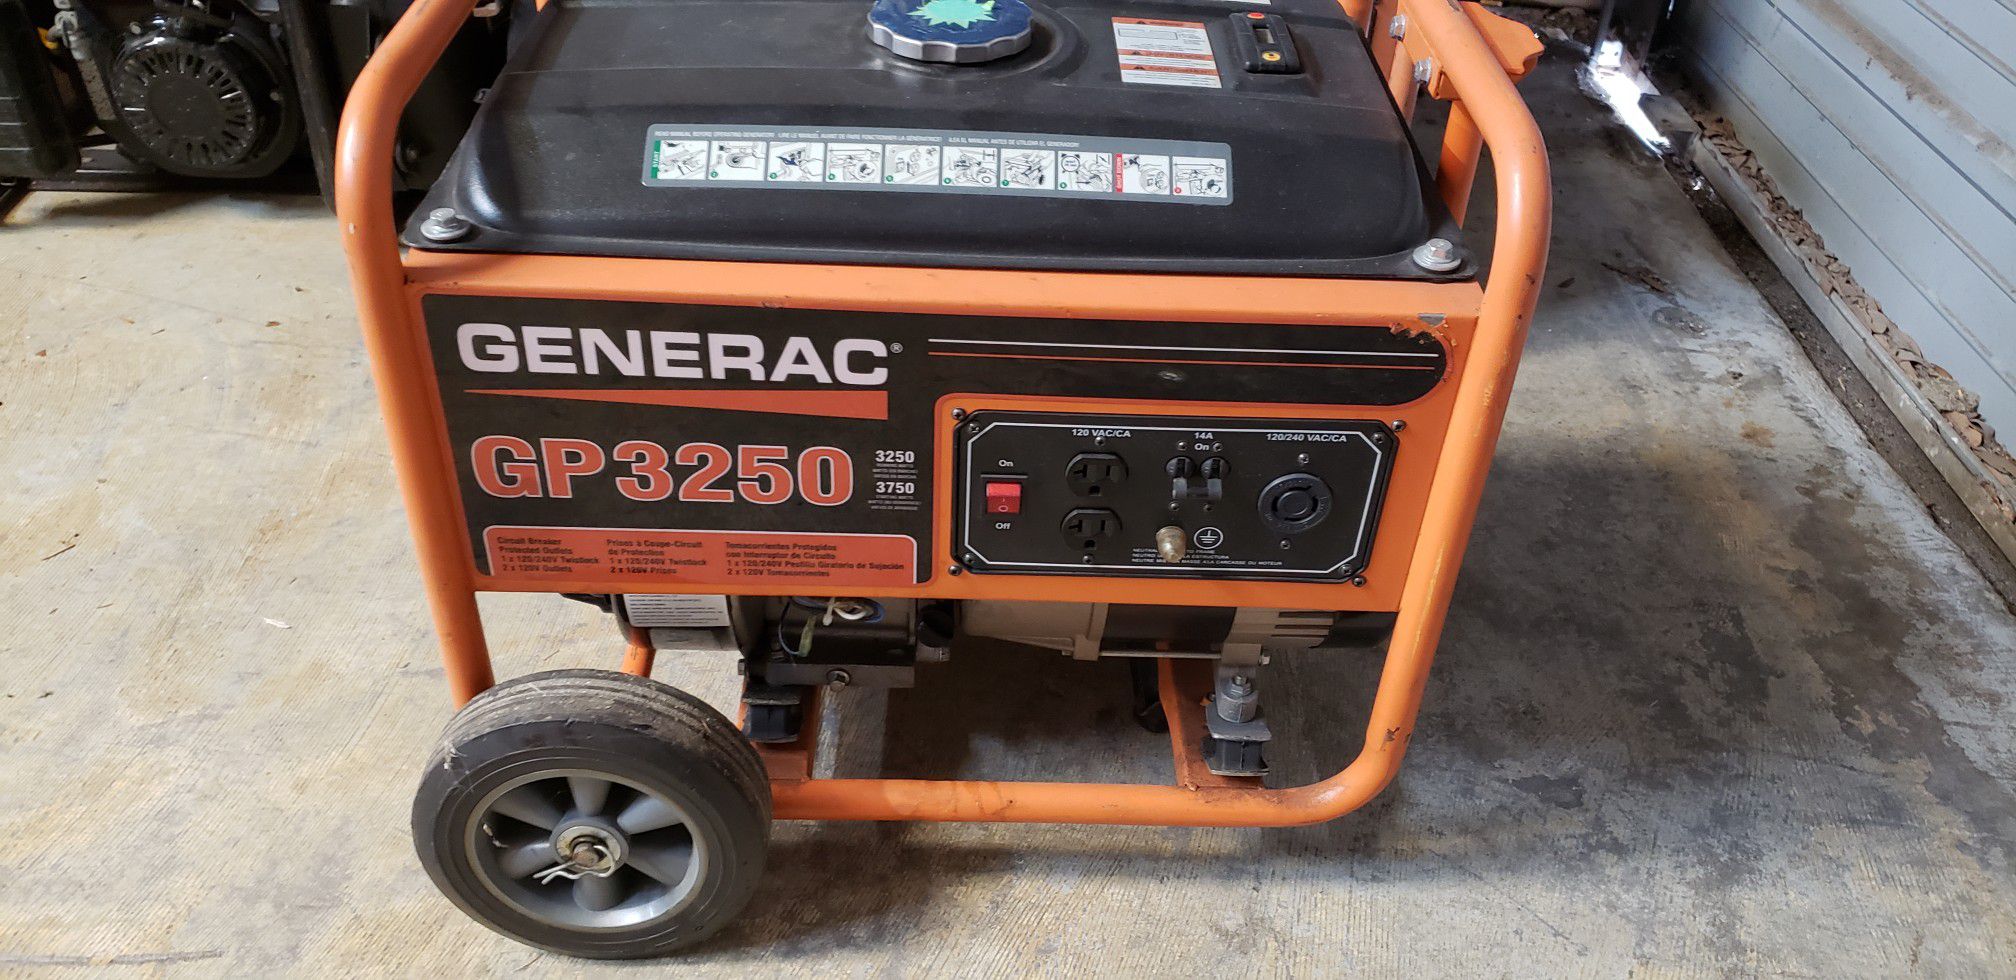 Generac GP3250 gas generator